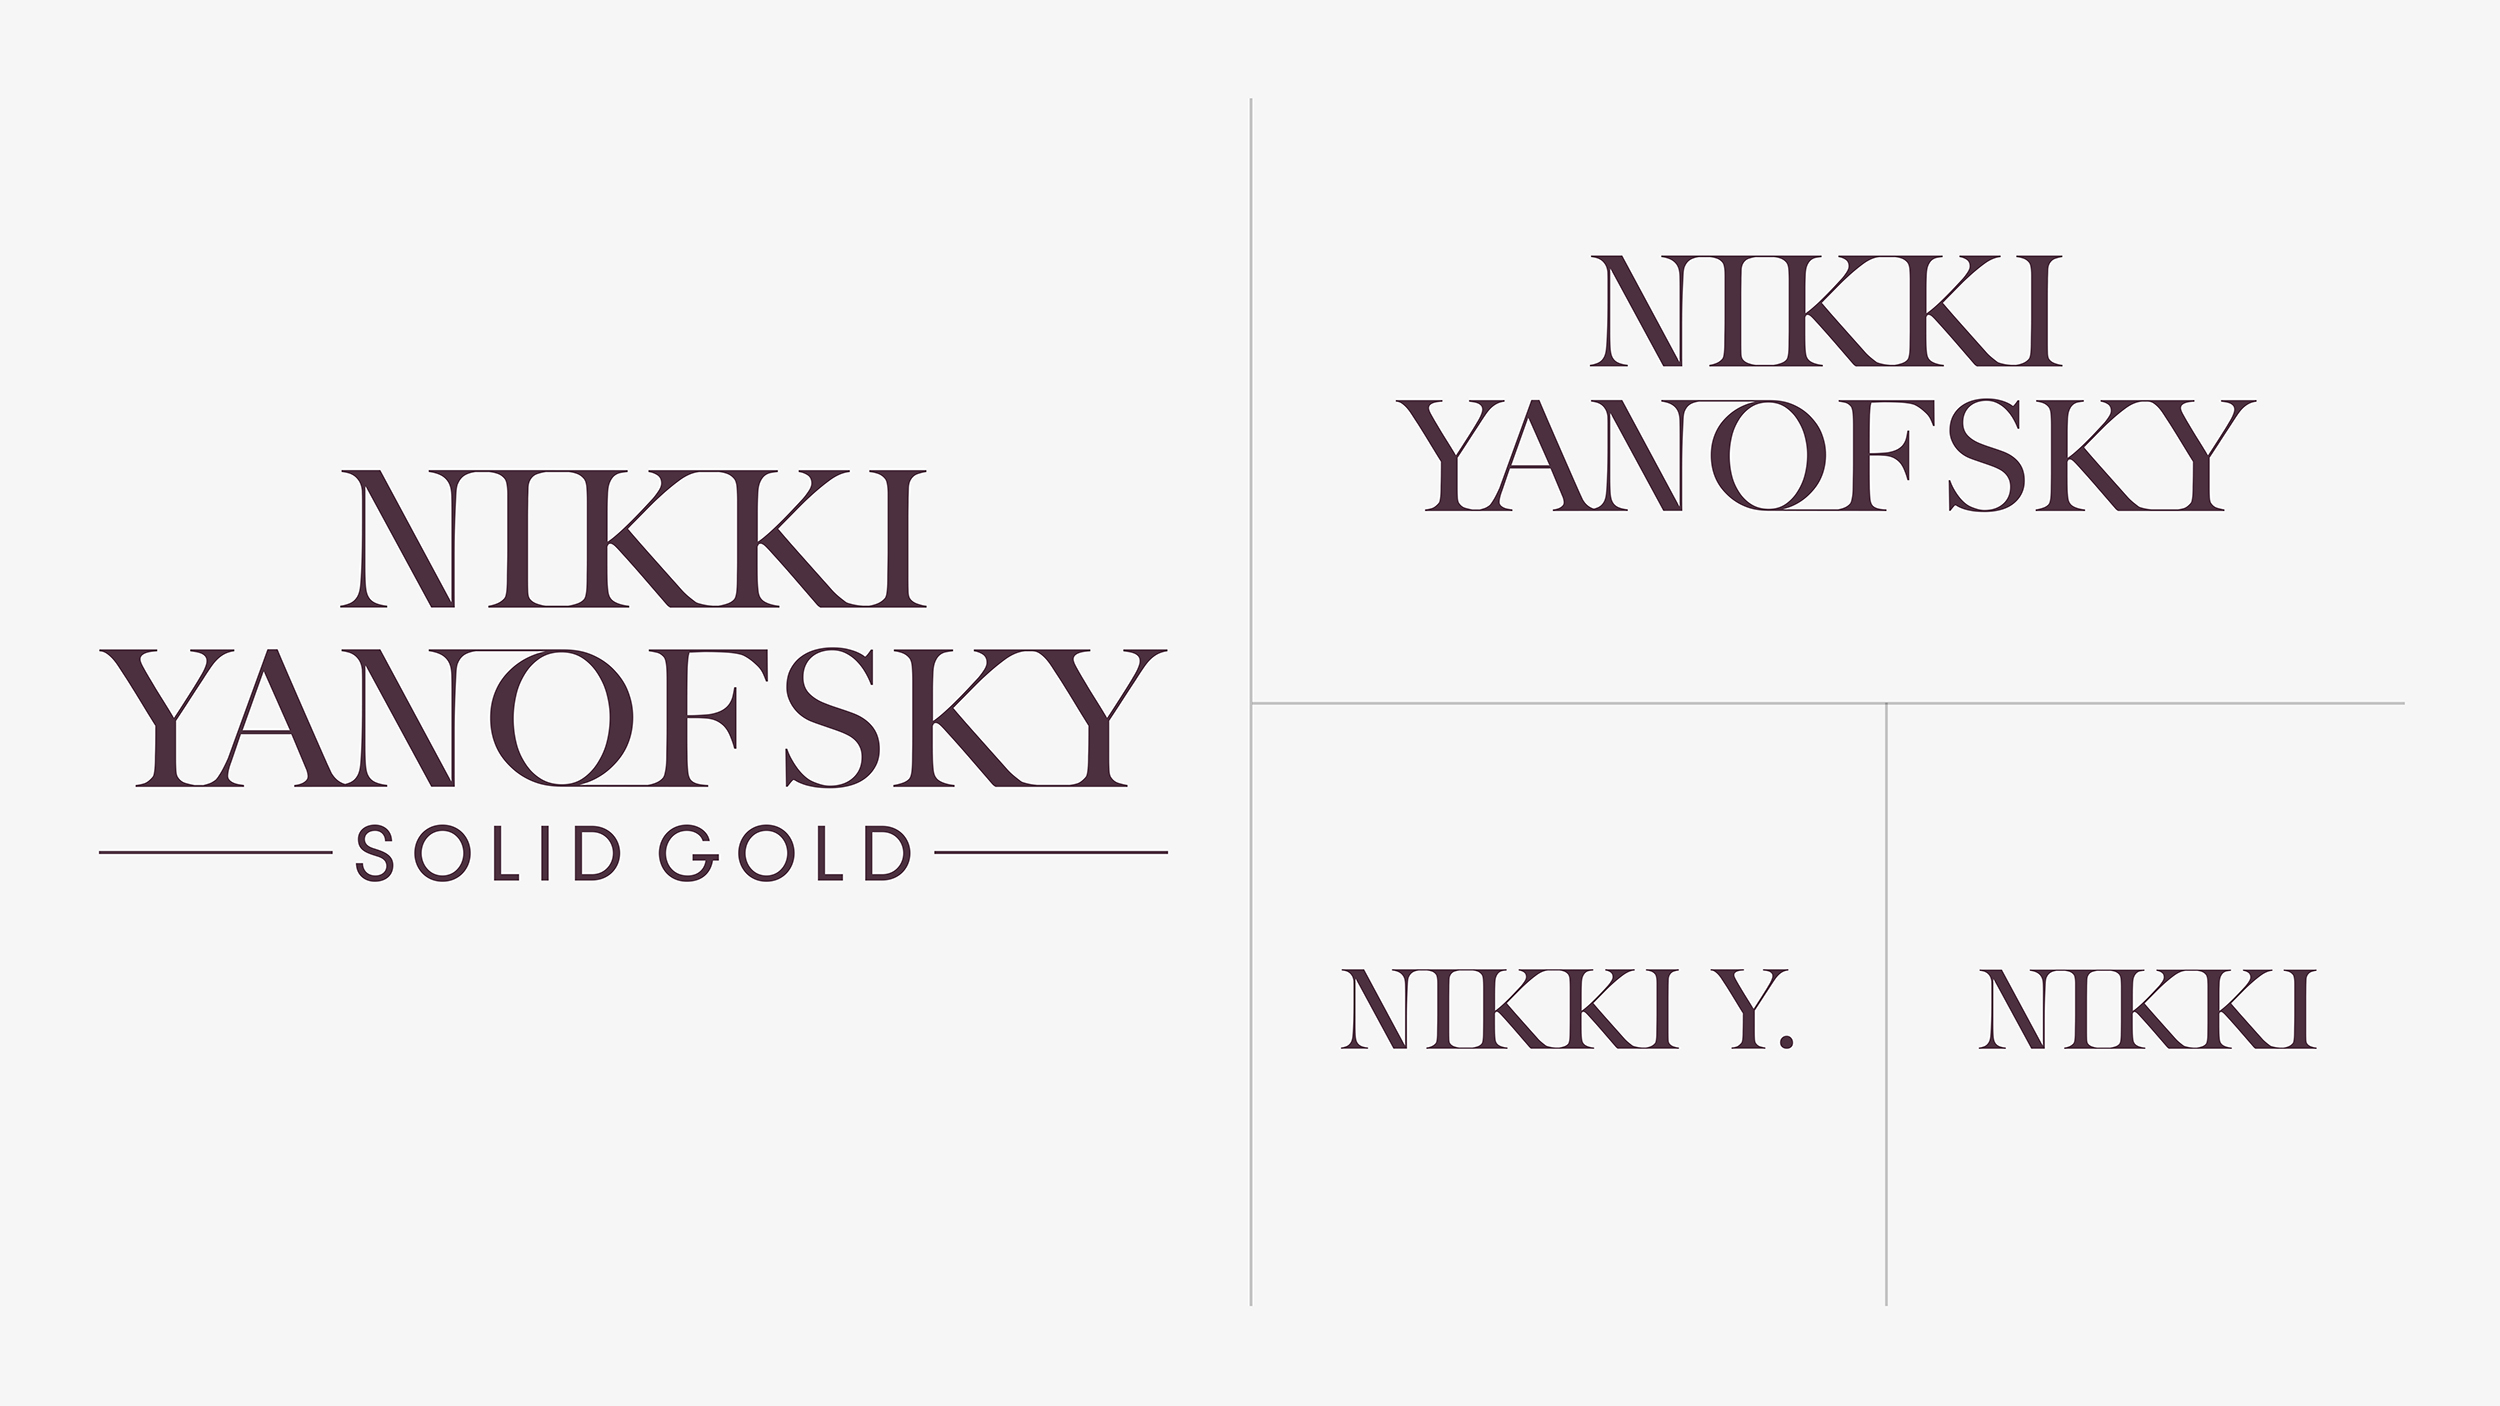 Logo/identity system created for Nikki Yanofsky's 